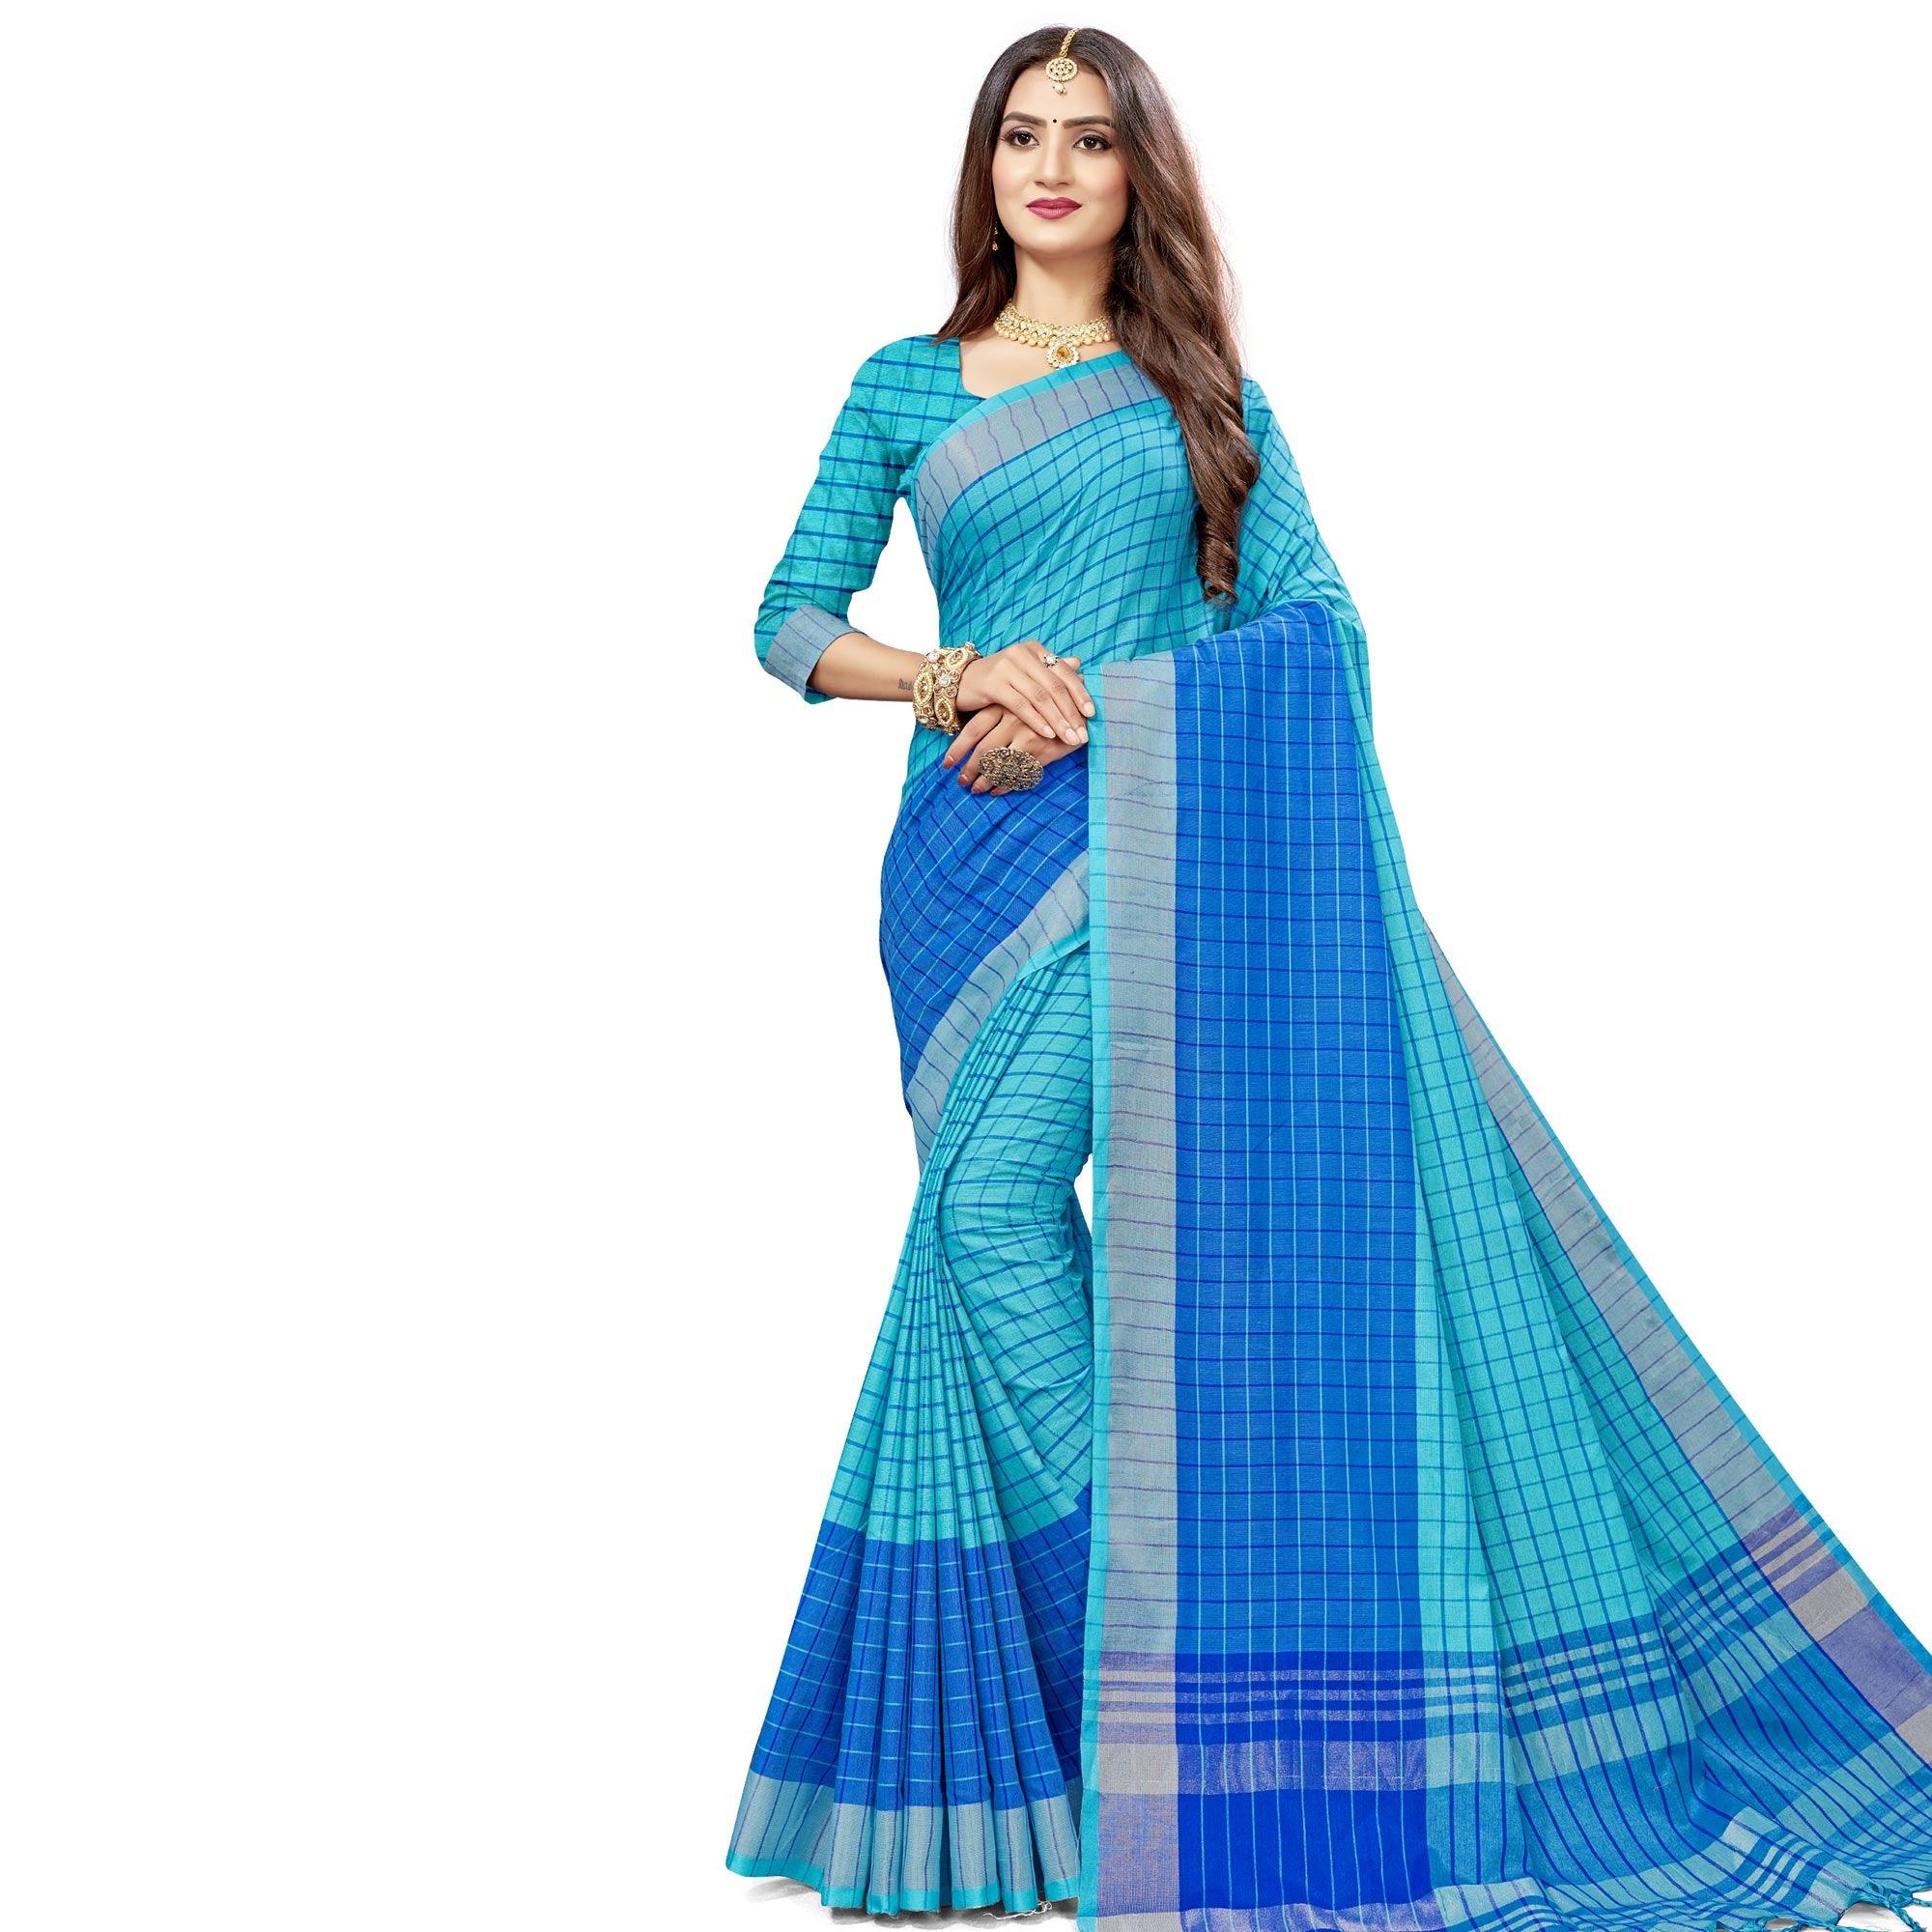 Graceful Blue Colored Fesive Wear Checks Print Cotton Silk Saree With Tassels - Peachmode